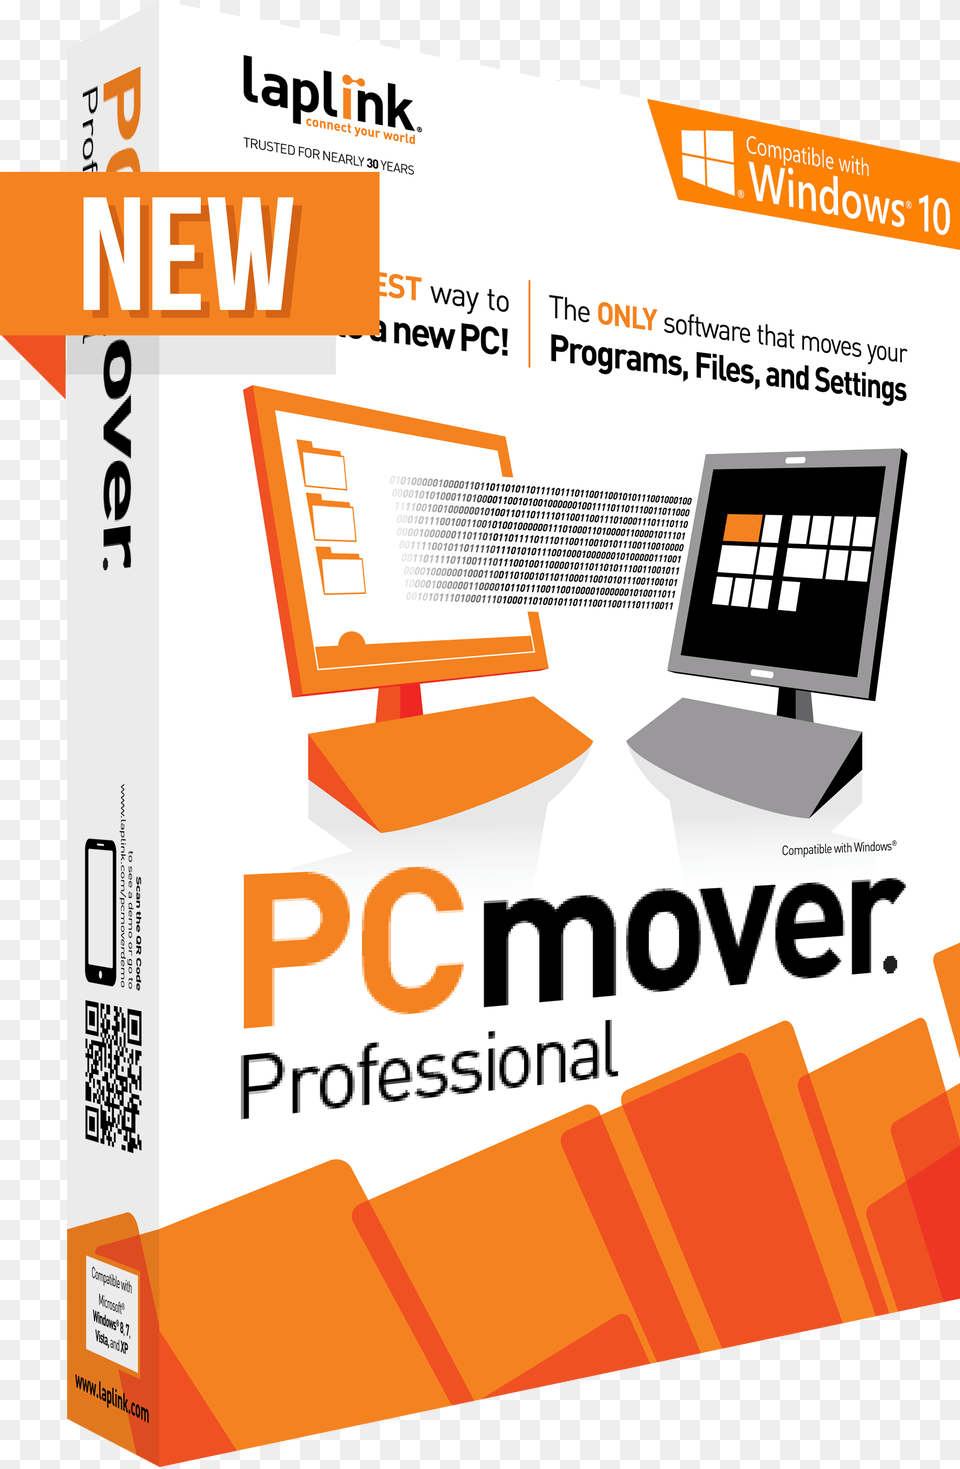 Pcmover Professional Left New Laplink Pcmover Professional, Advertisement, Computer, Electronics, Laptop Png